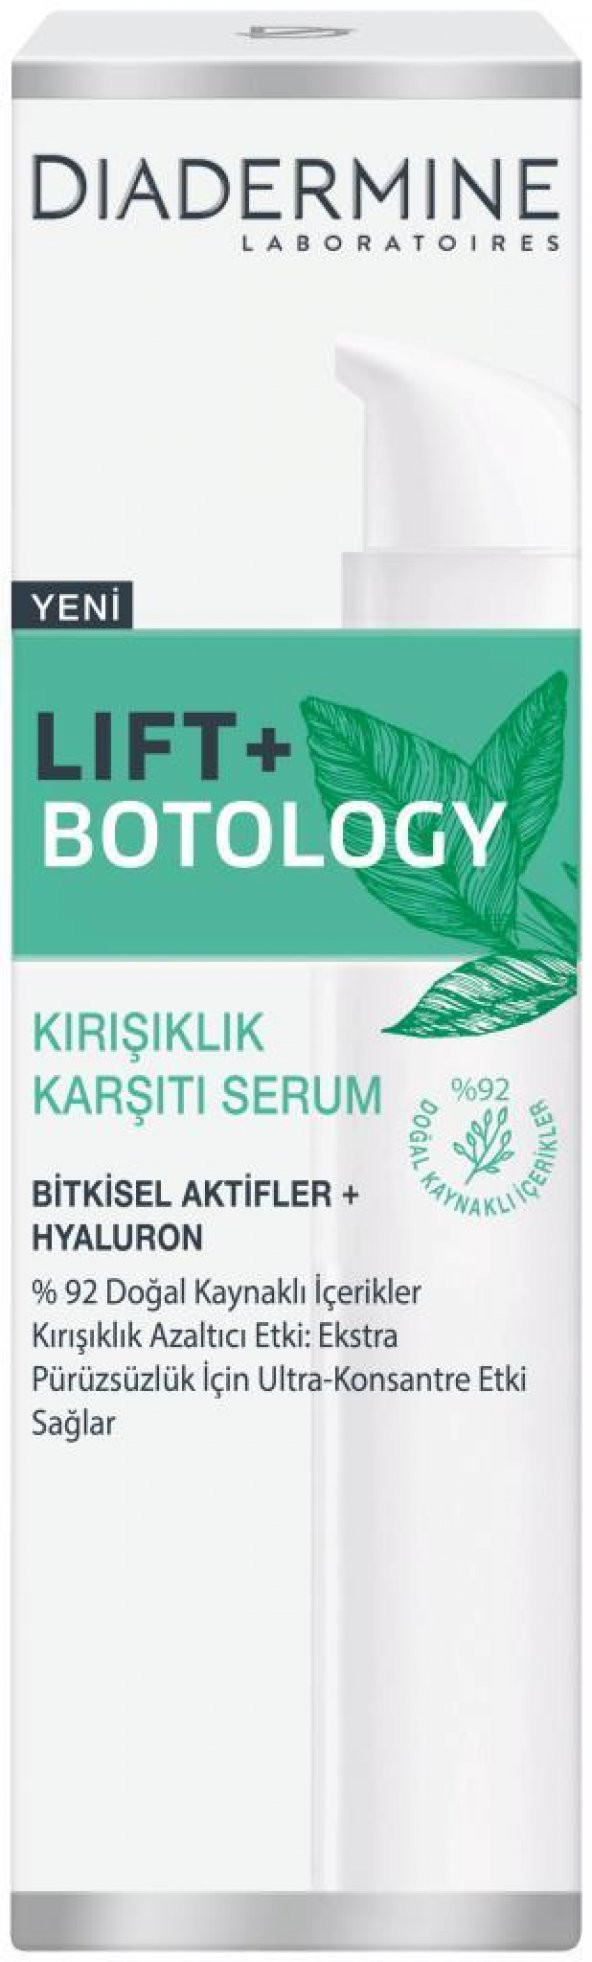 Diadermine Lift + Botology Kırışıklık Karşıtı Serum 40 ml